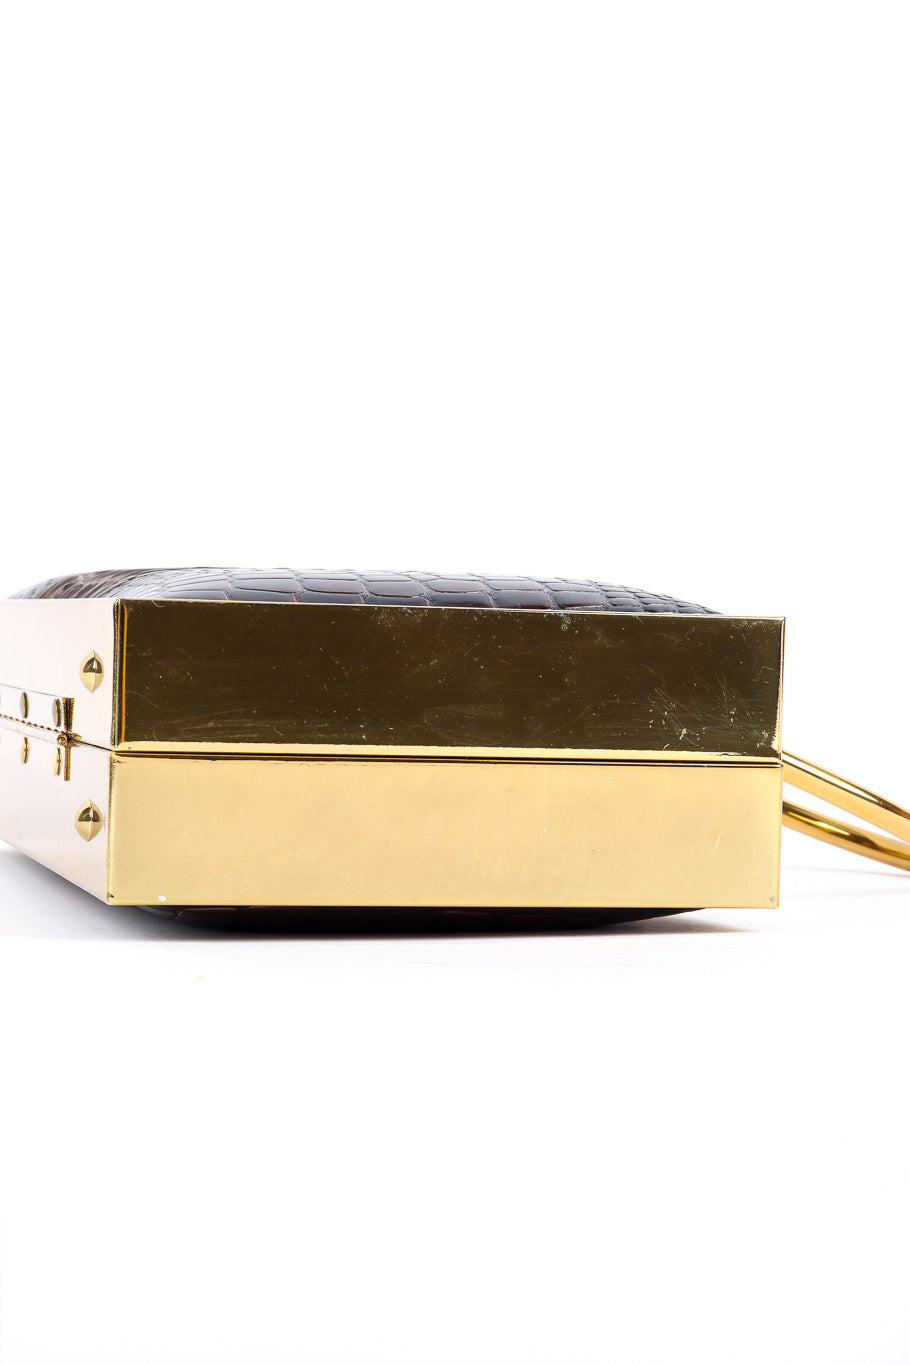 Lou Taylor gold frame box purse side product shot @recessla